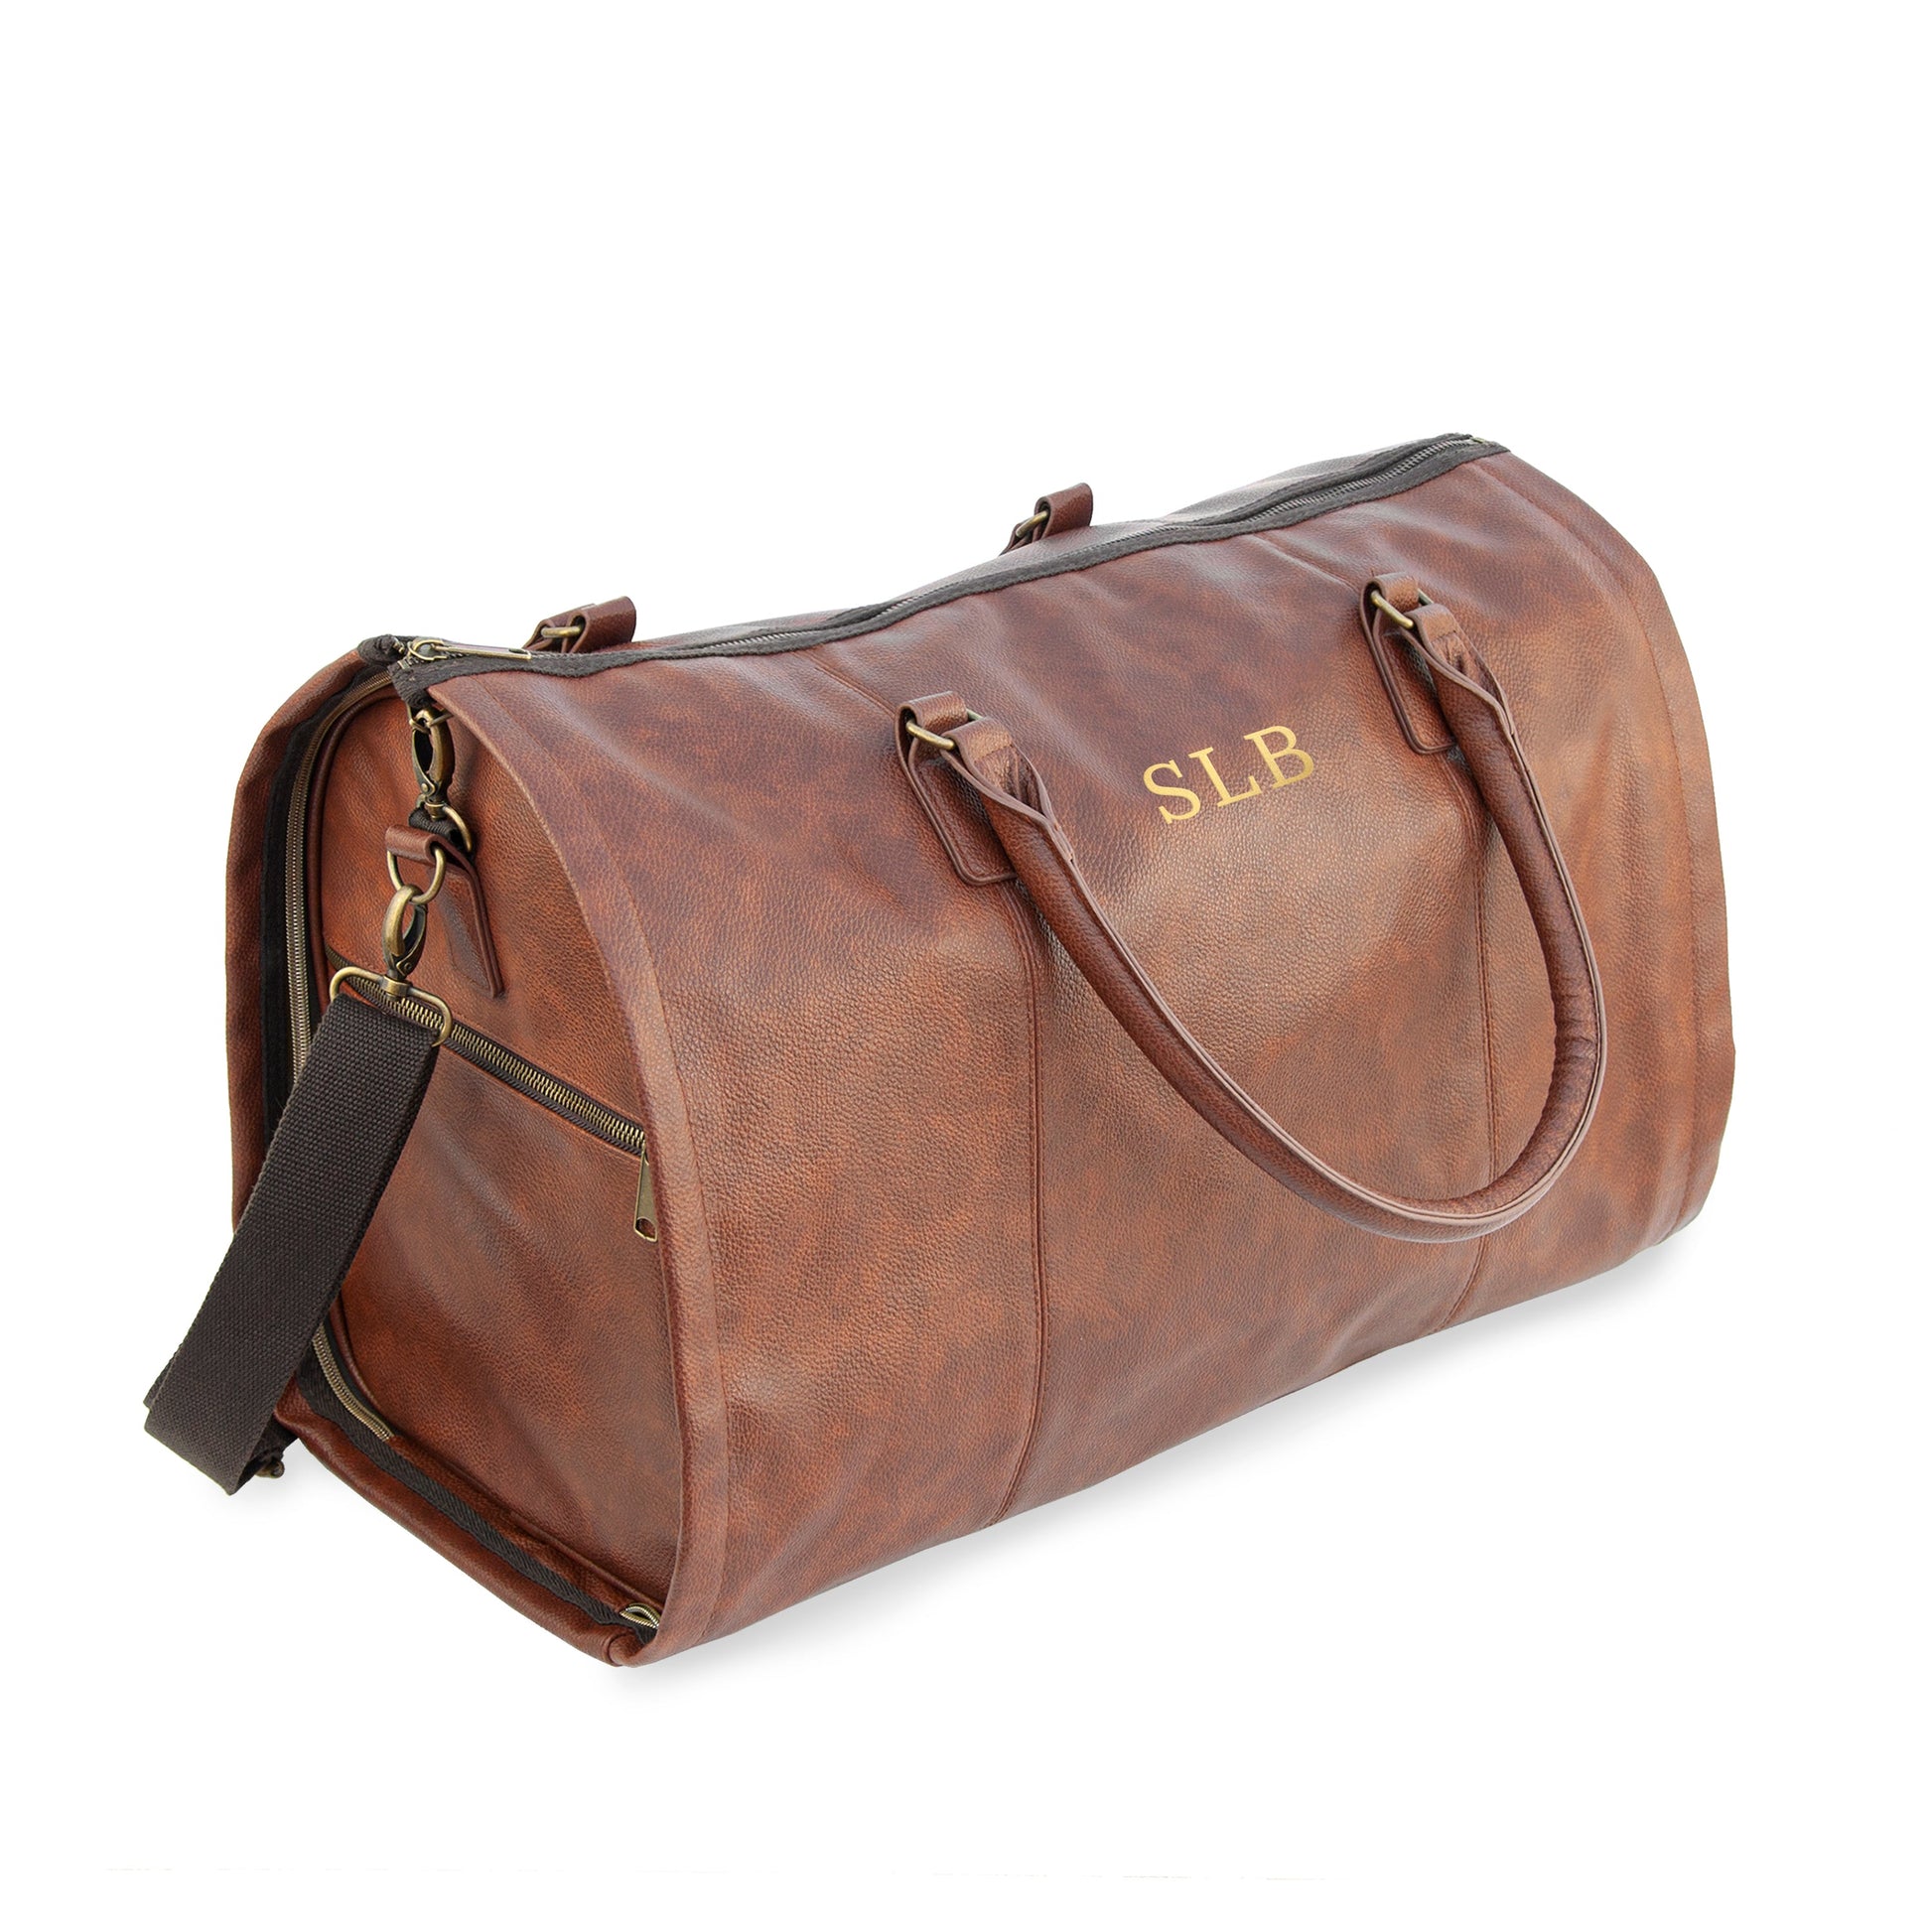 Personalized Men's Holdall - Monogrammed Business Travel Bag 